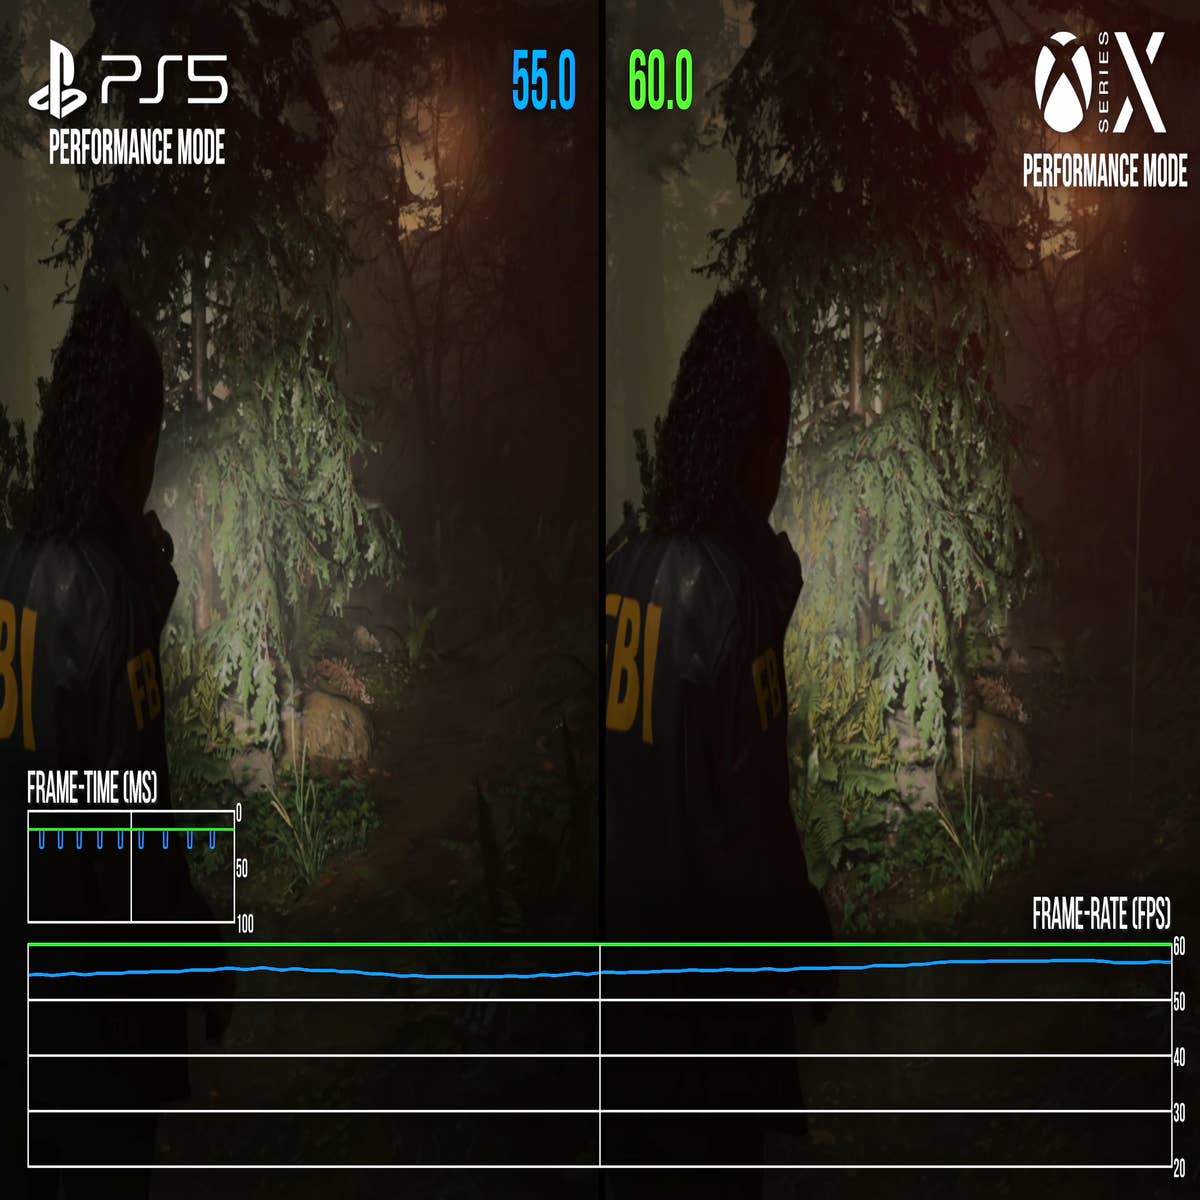 Alan Wake 2, PS5, Quality Mode (30 FPS) vs Performance Mode (60 FPS)